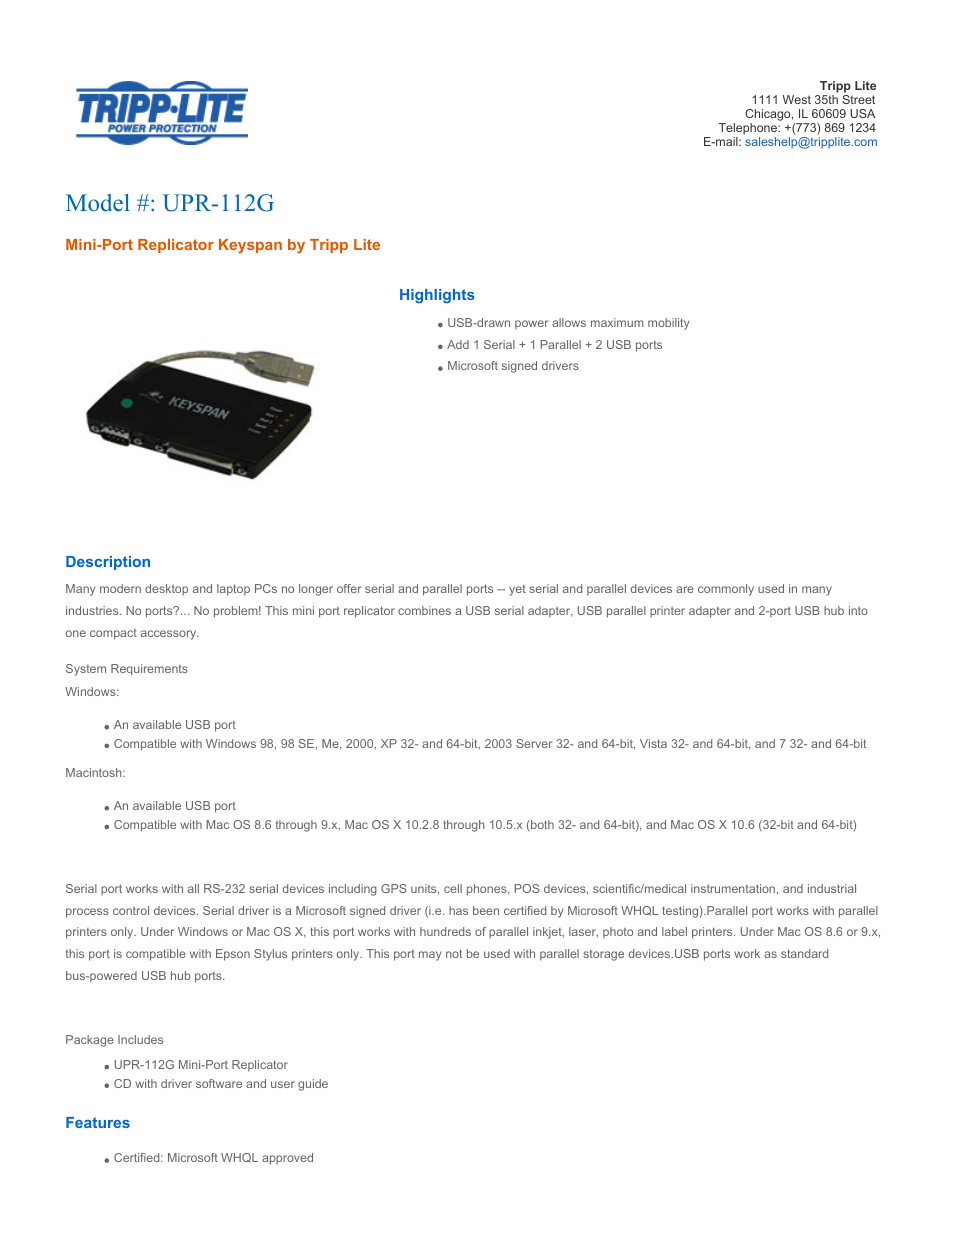 Mini-Port Replicator UPR-112G